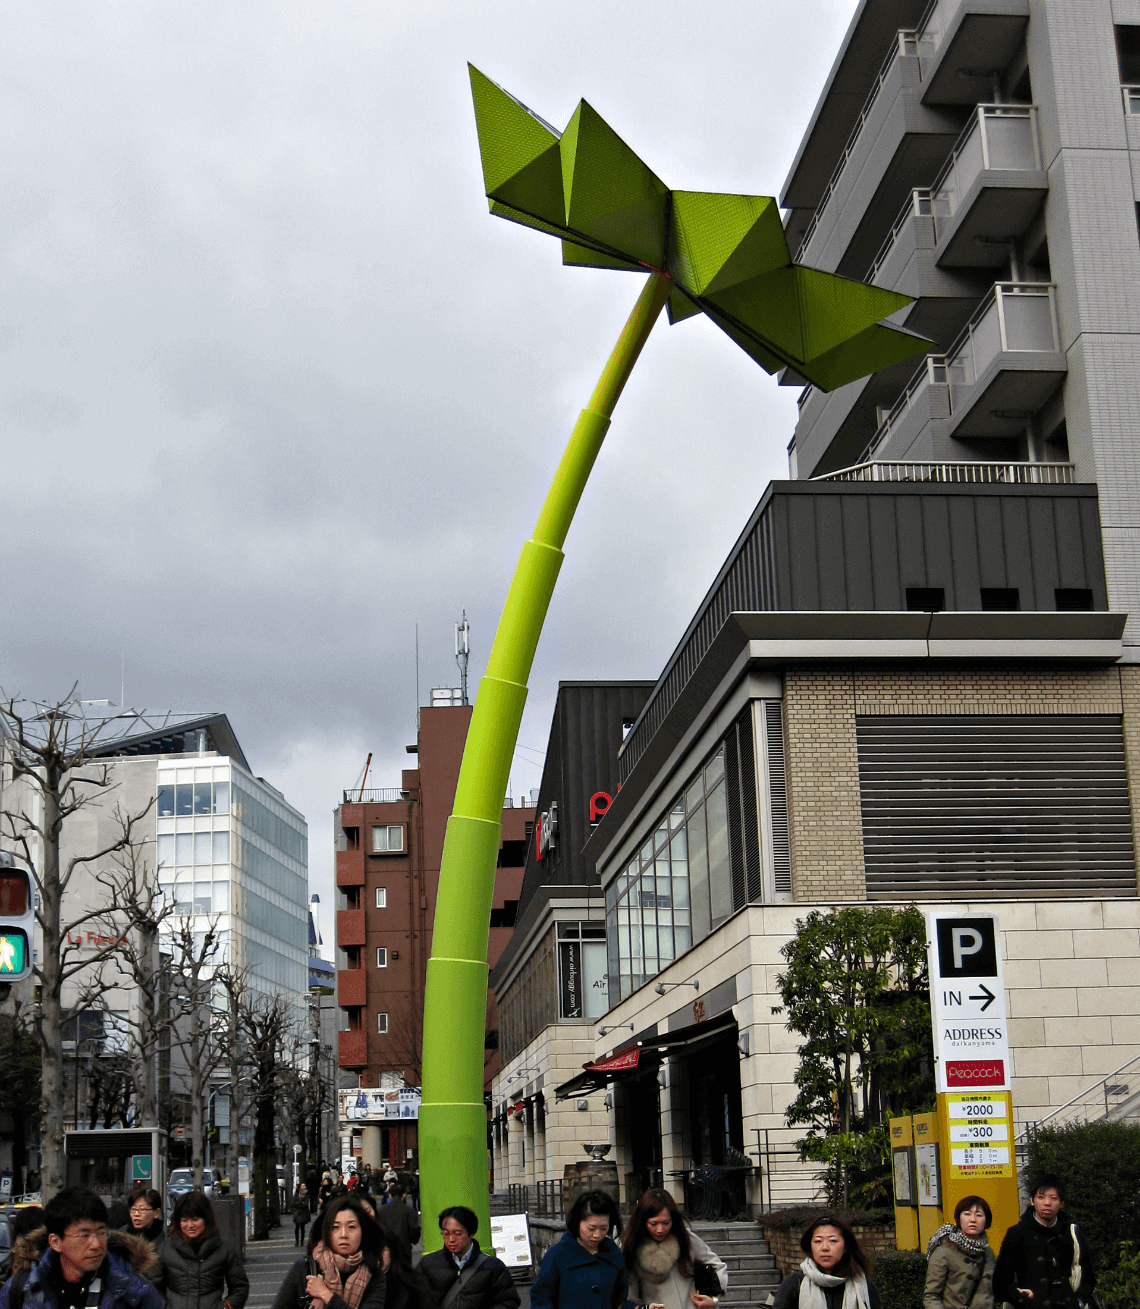 The Green Flower sculpture in Daikanyama, Tokyo, Japan